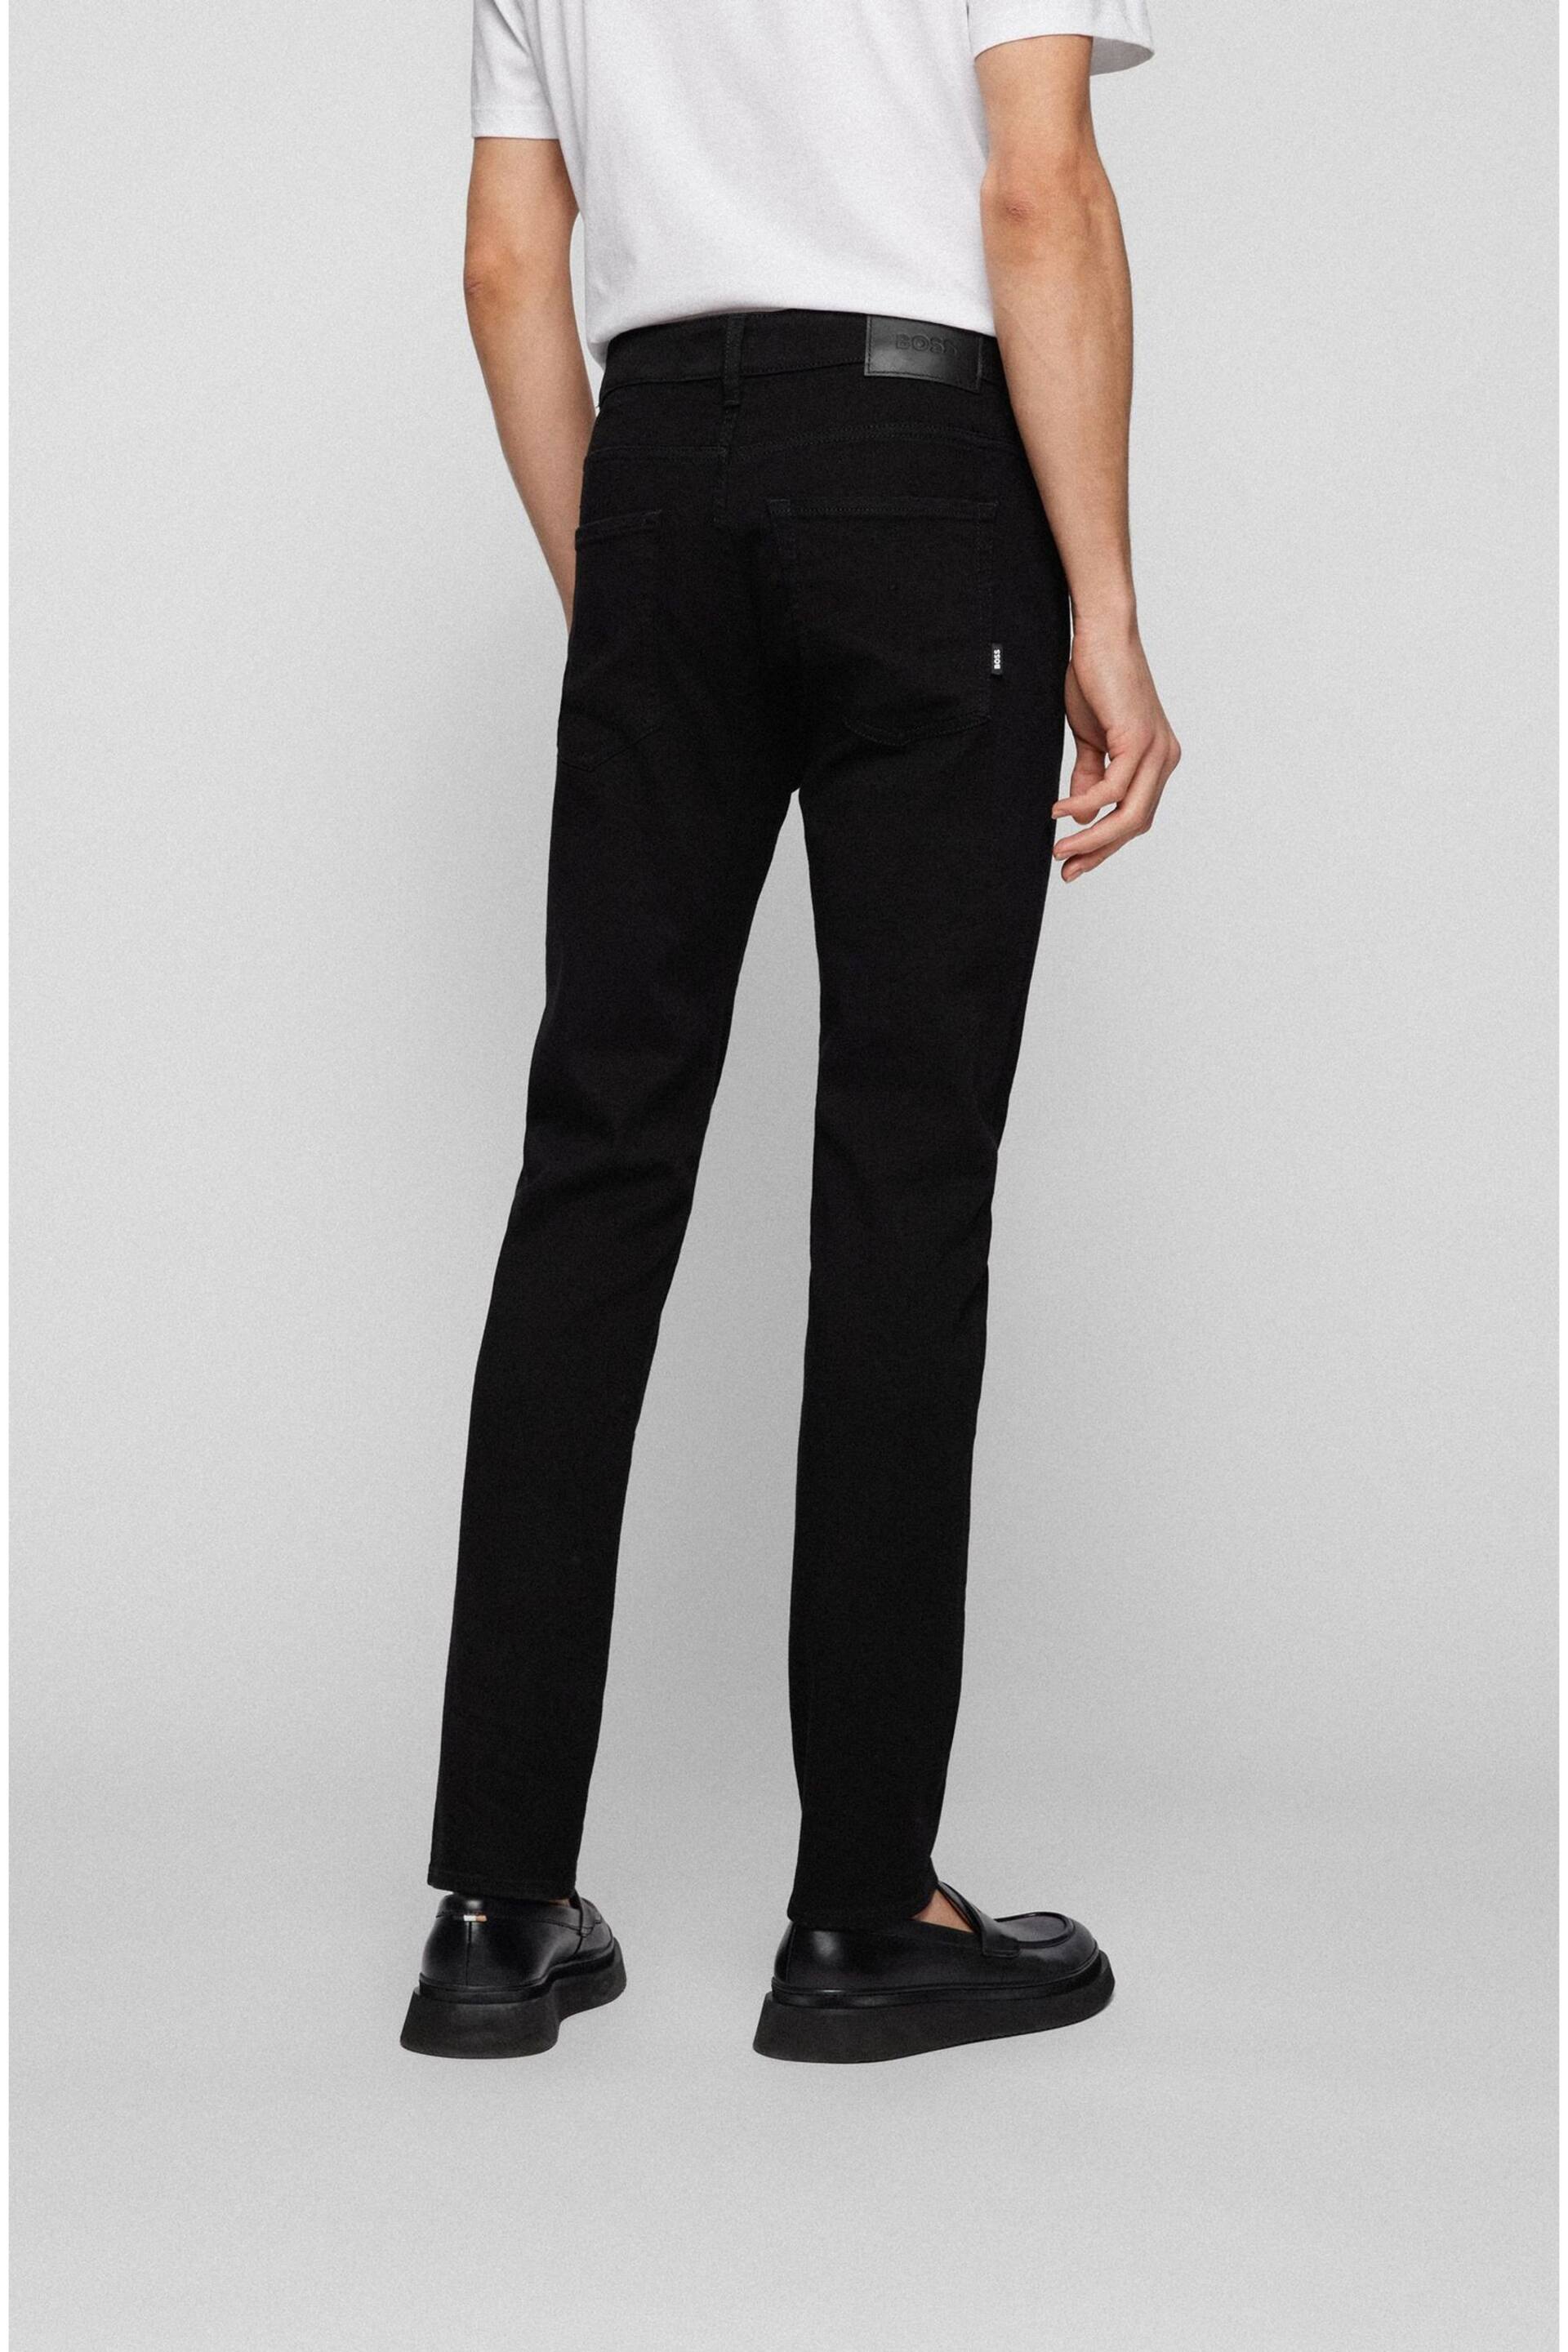 BOSS Black Delaware Slim Fit Stretch Jeans - Image 2 of 5